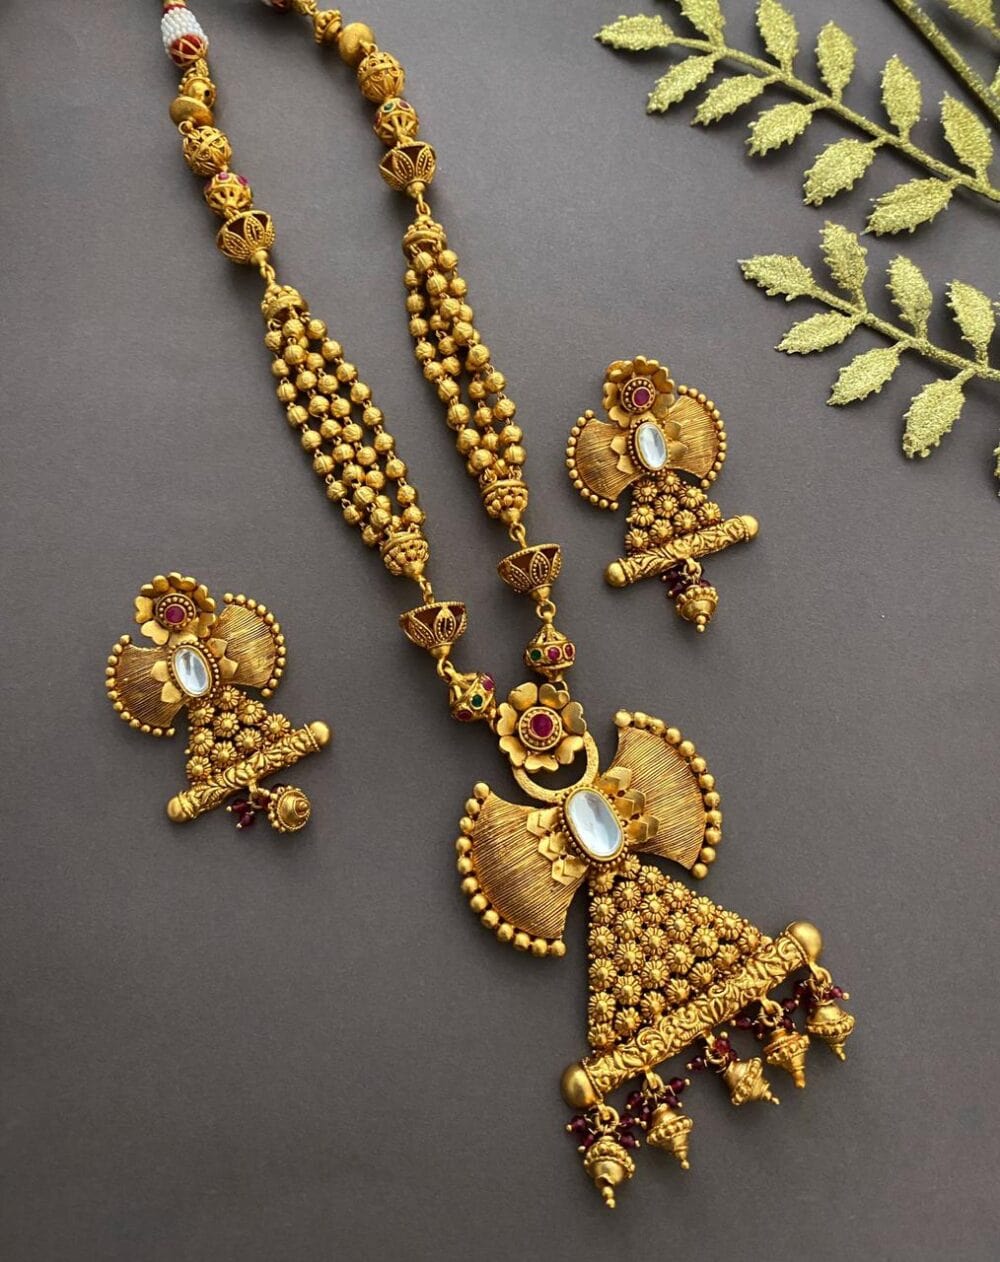 Traditional Gold Plated Antique Golden Pendant Necklace Set By Gehna Shop Antique Golden Necklace Sets